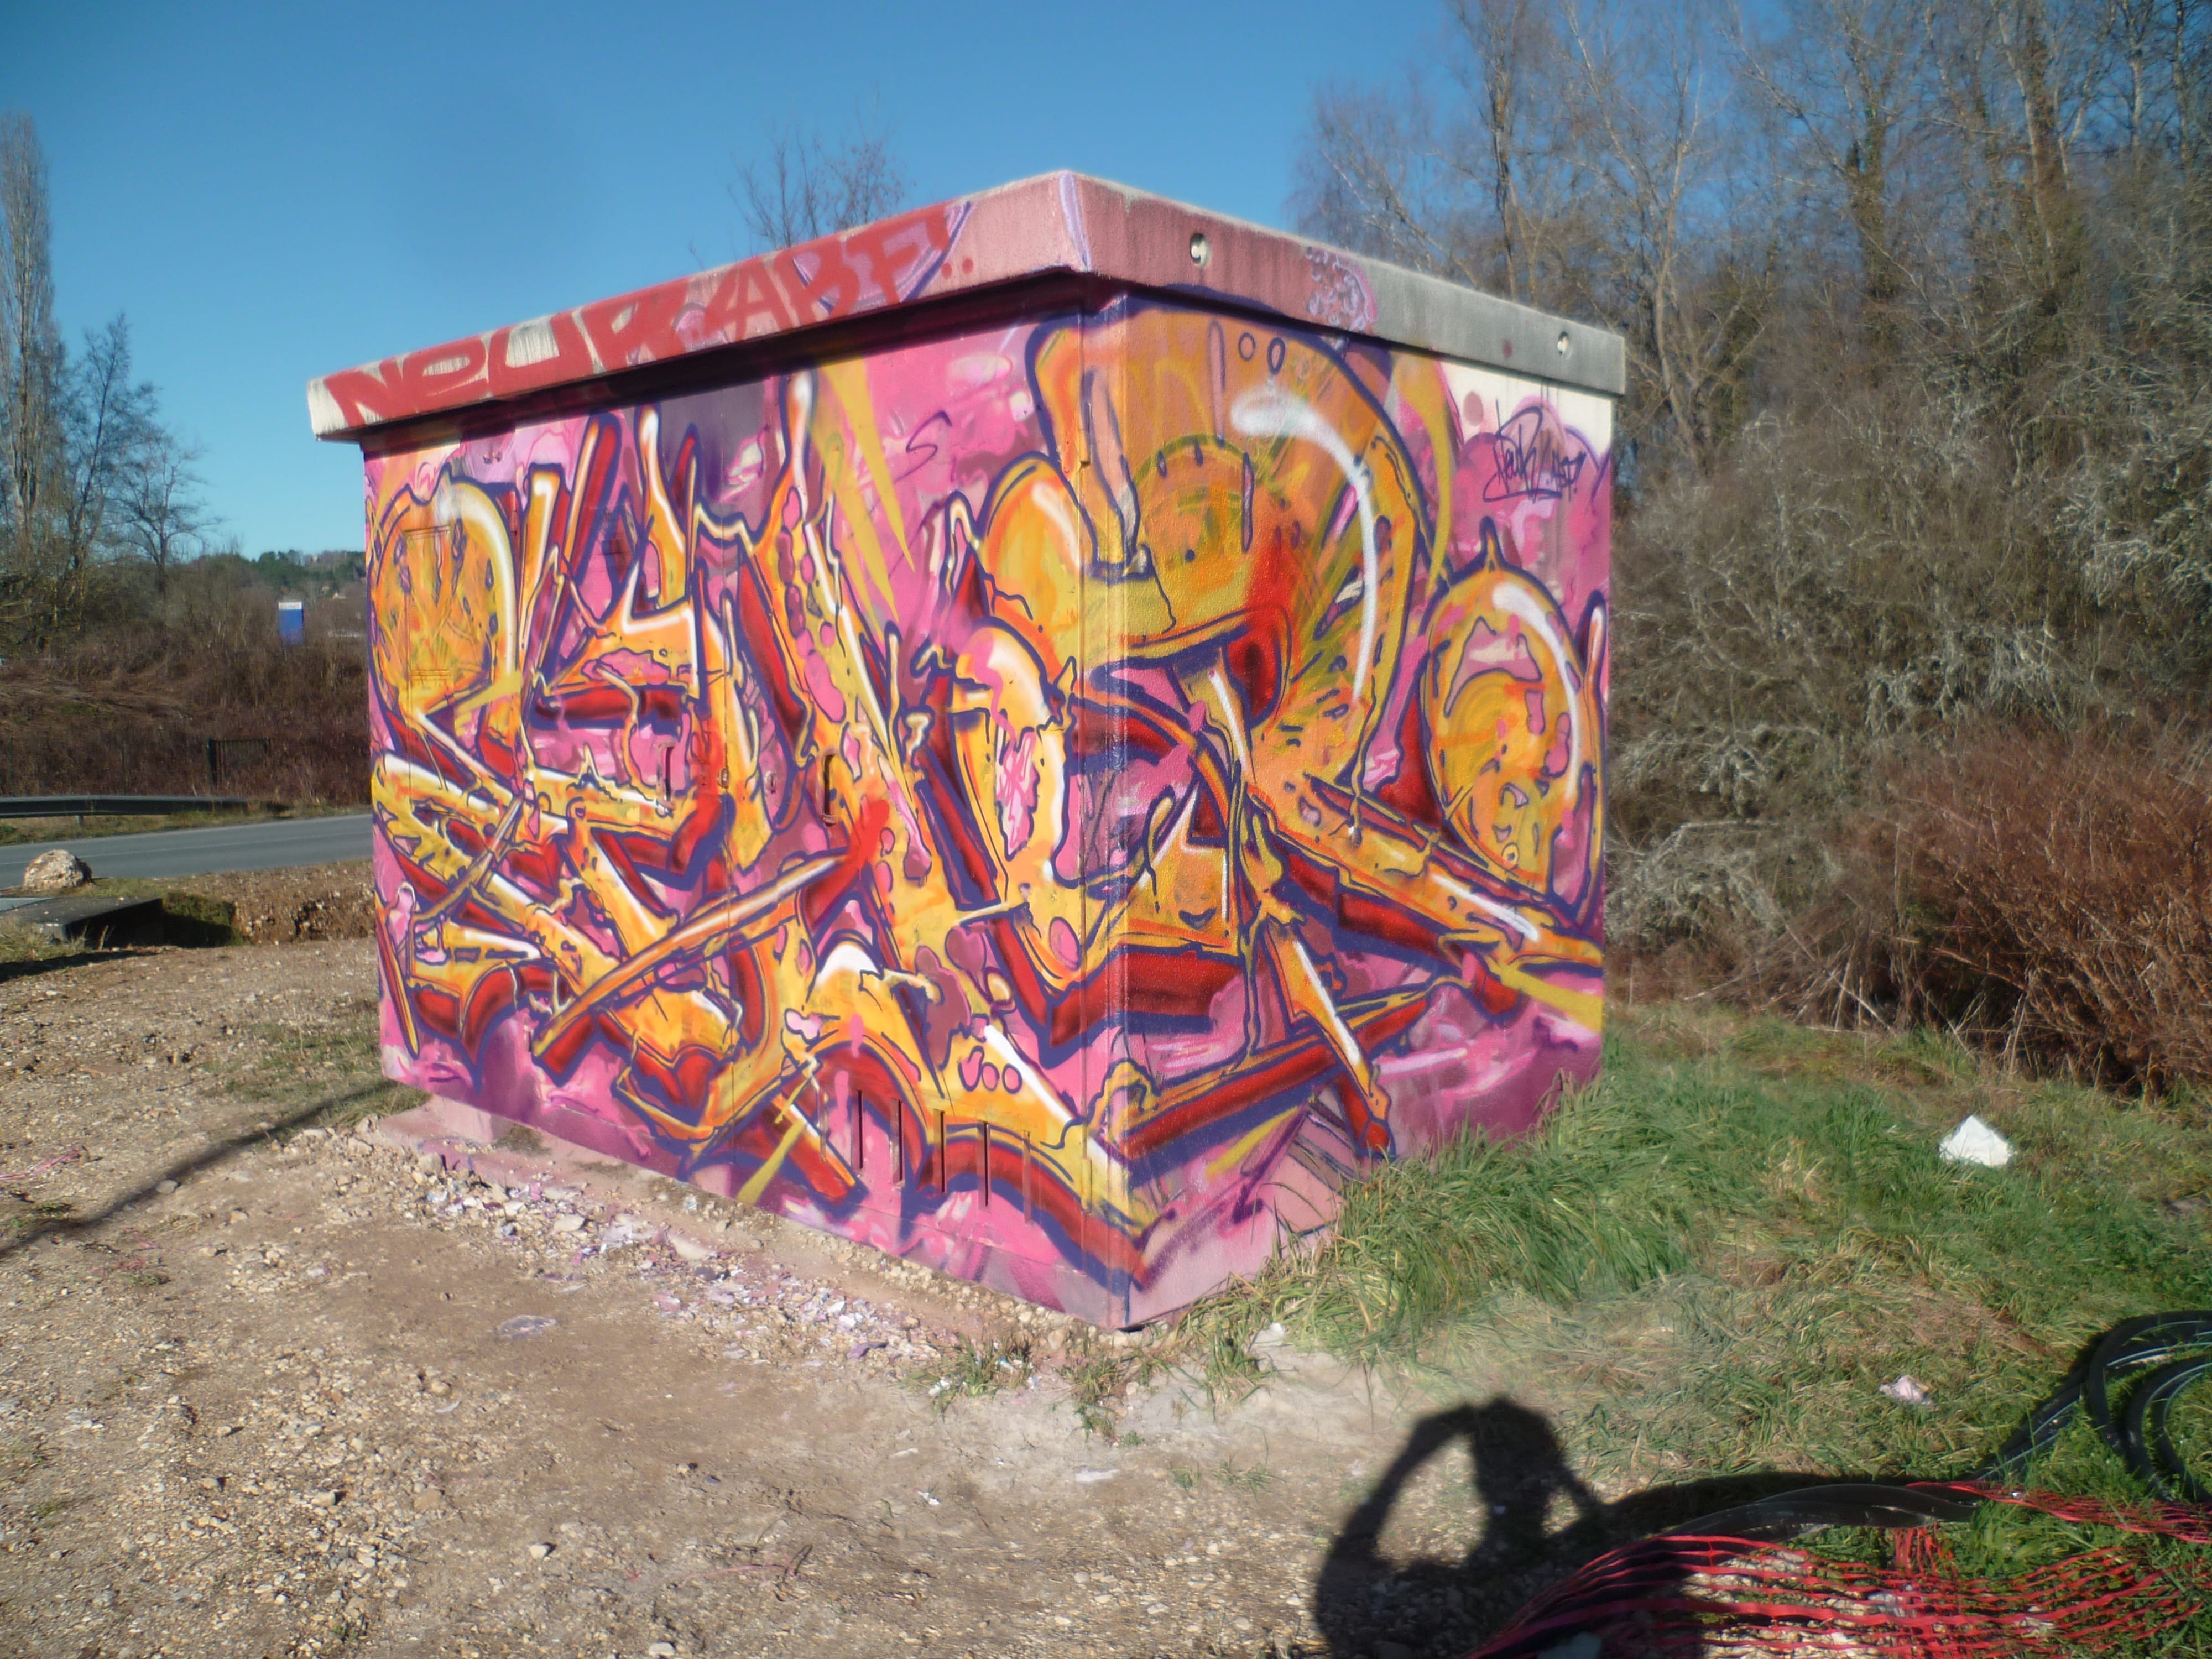 Graffiti 5655 #neurabf captured by Neur Abf in Sanilhac France